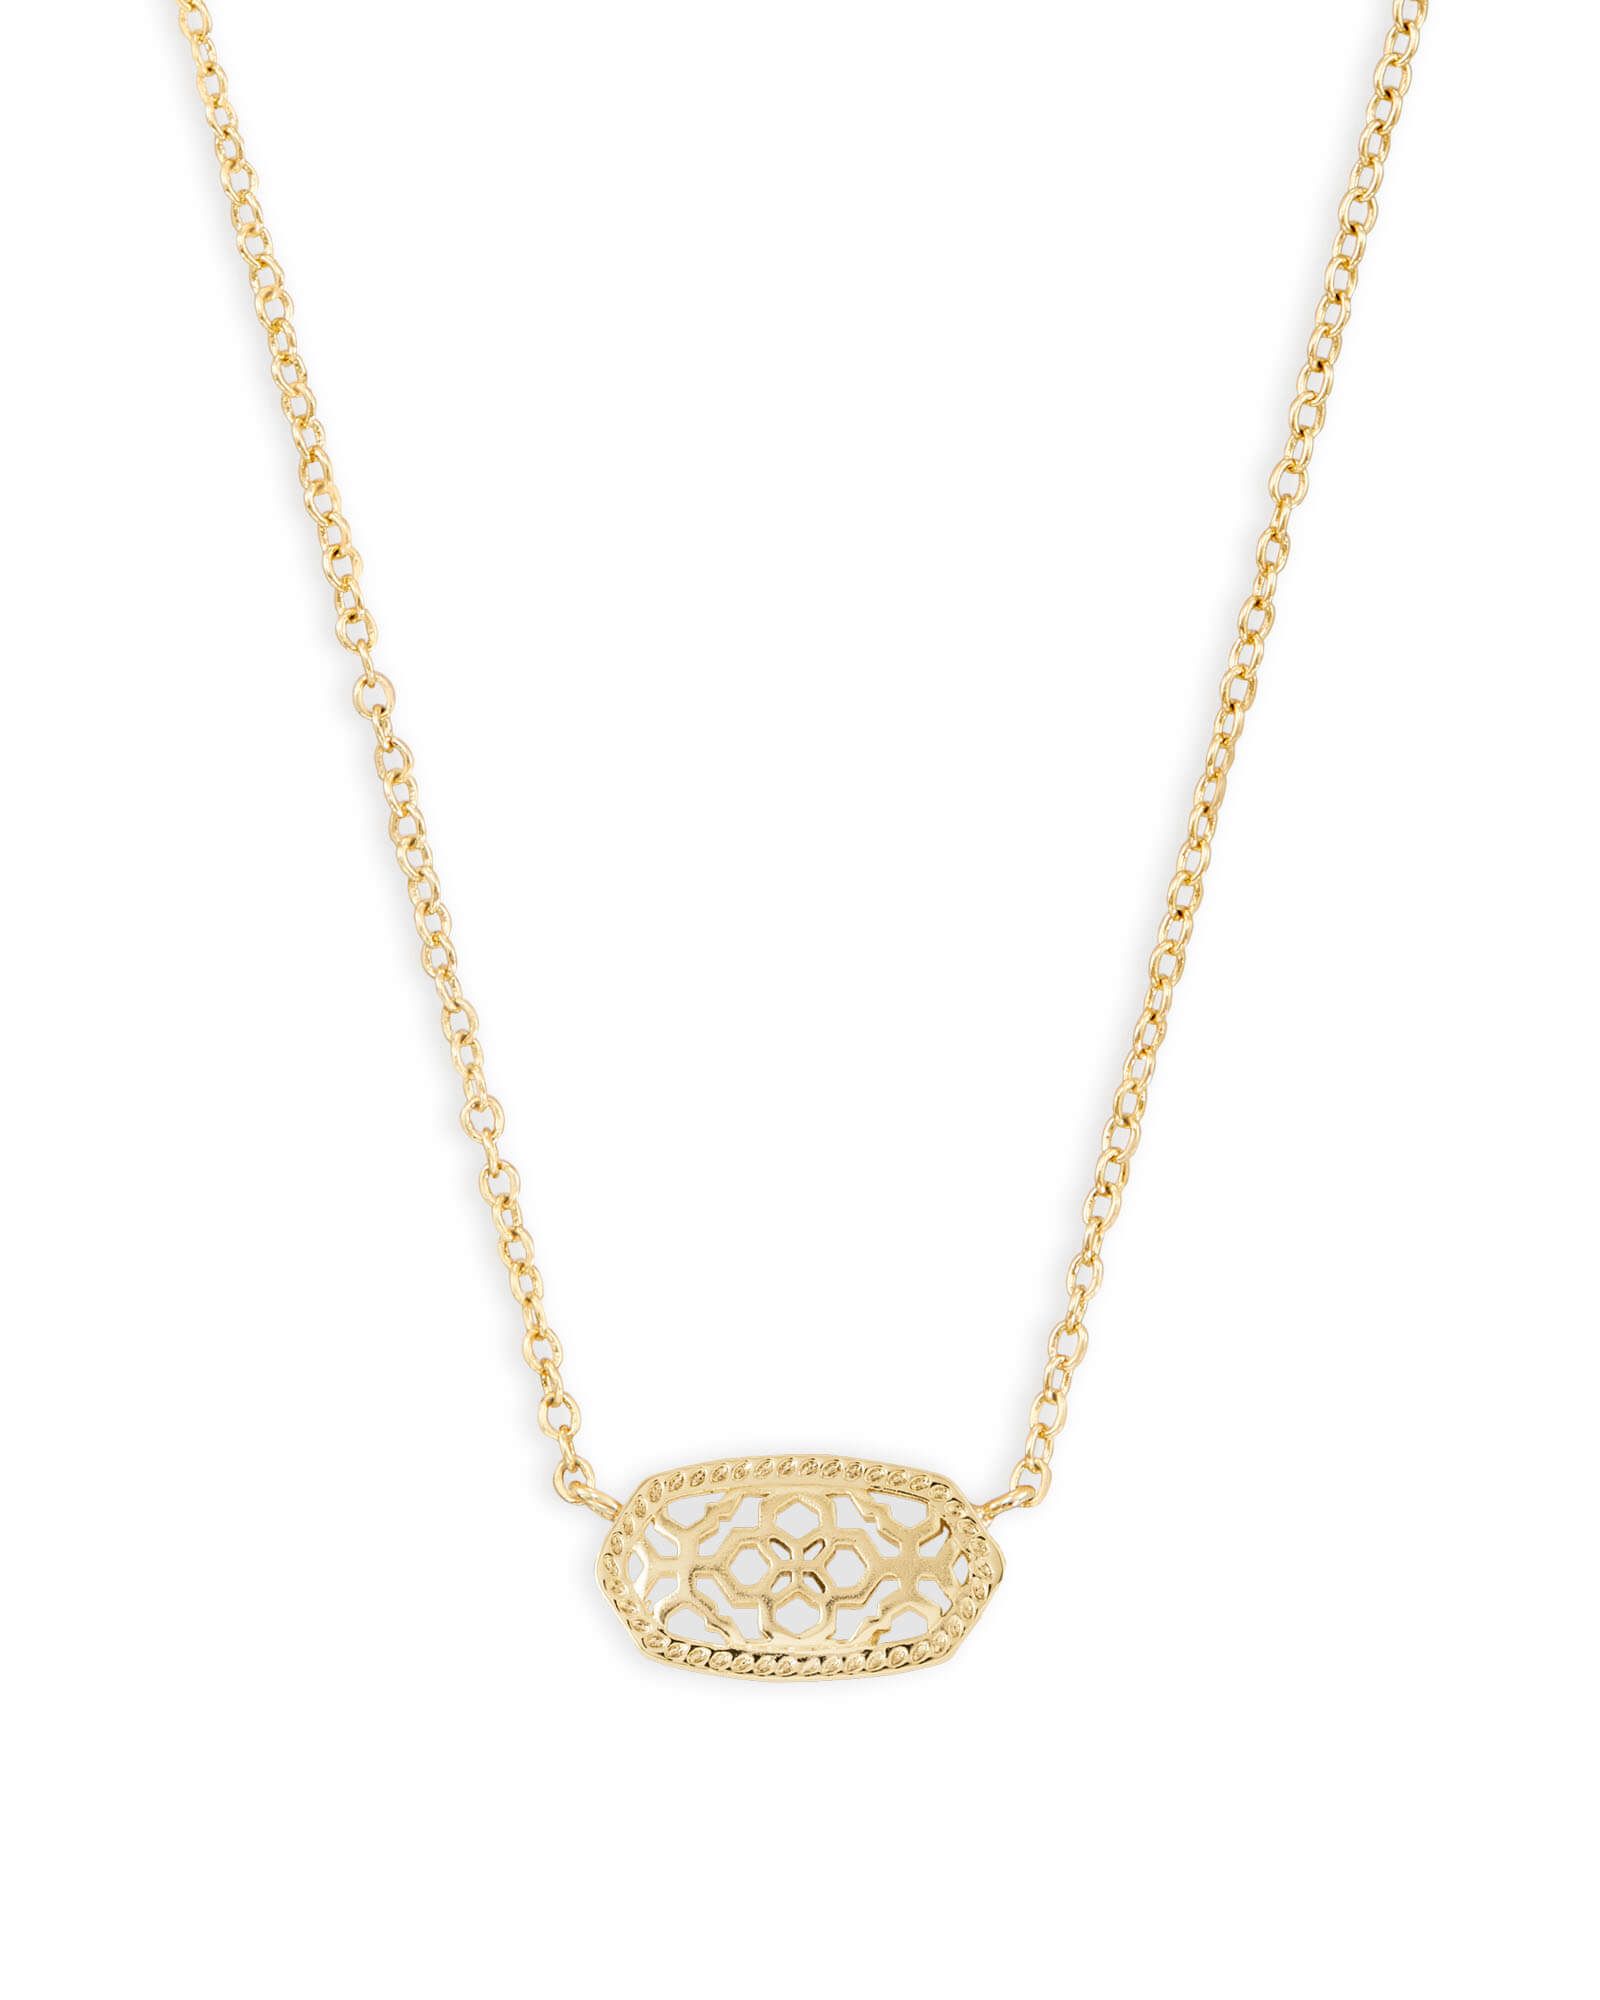 Elisa Gold Pendant Necklace in Gold Filigree | Kendra Scott